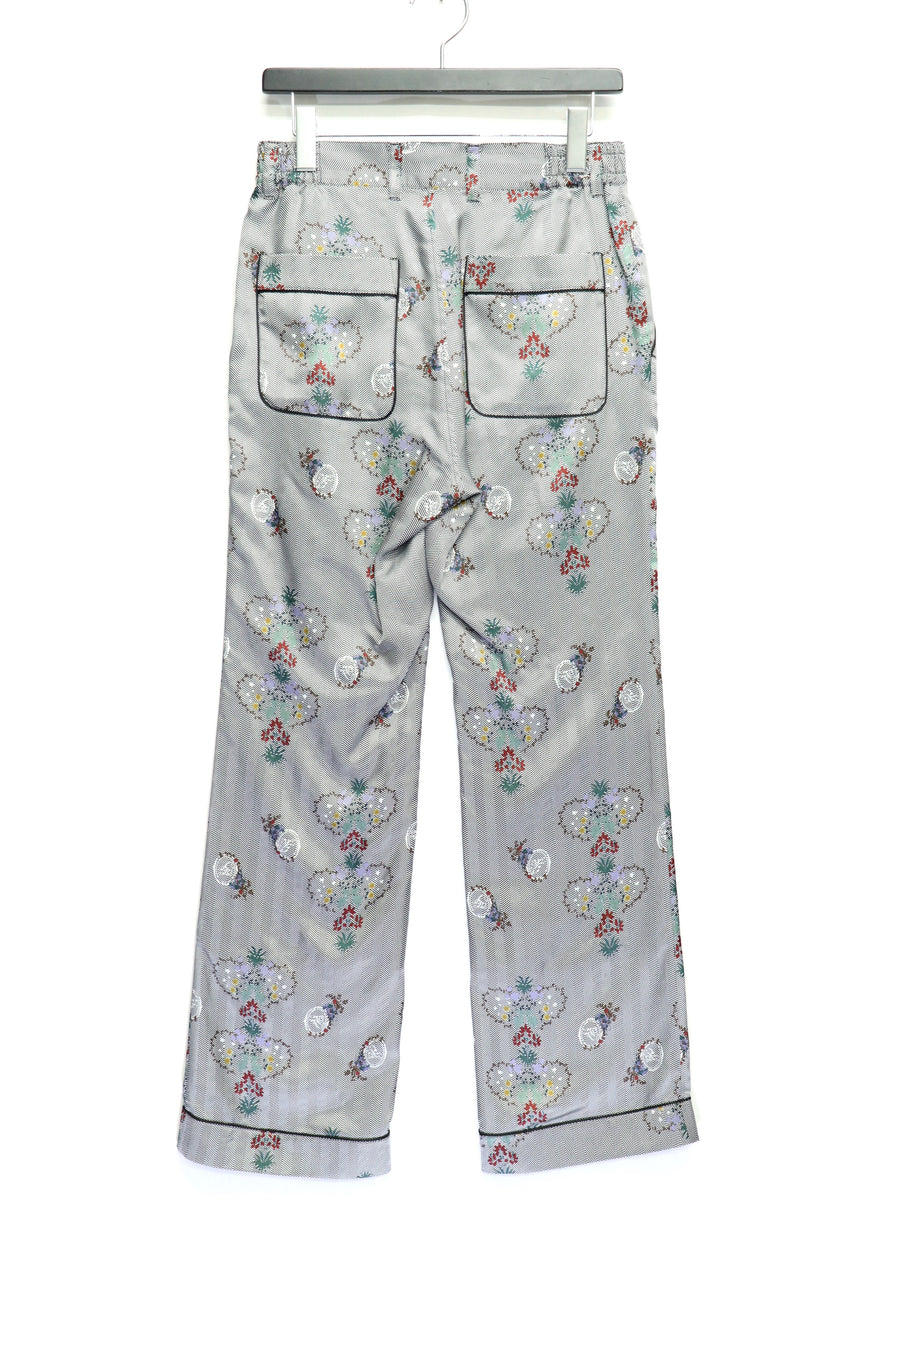 Taiga Igari(タイガ イガリ)の22aw Dairy Pajamas Pantsの通販